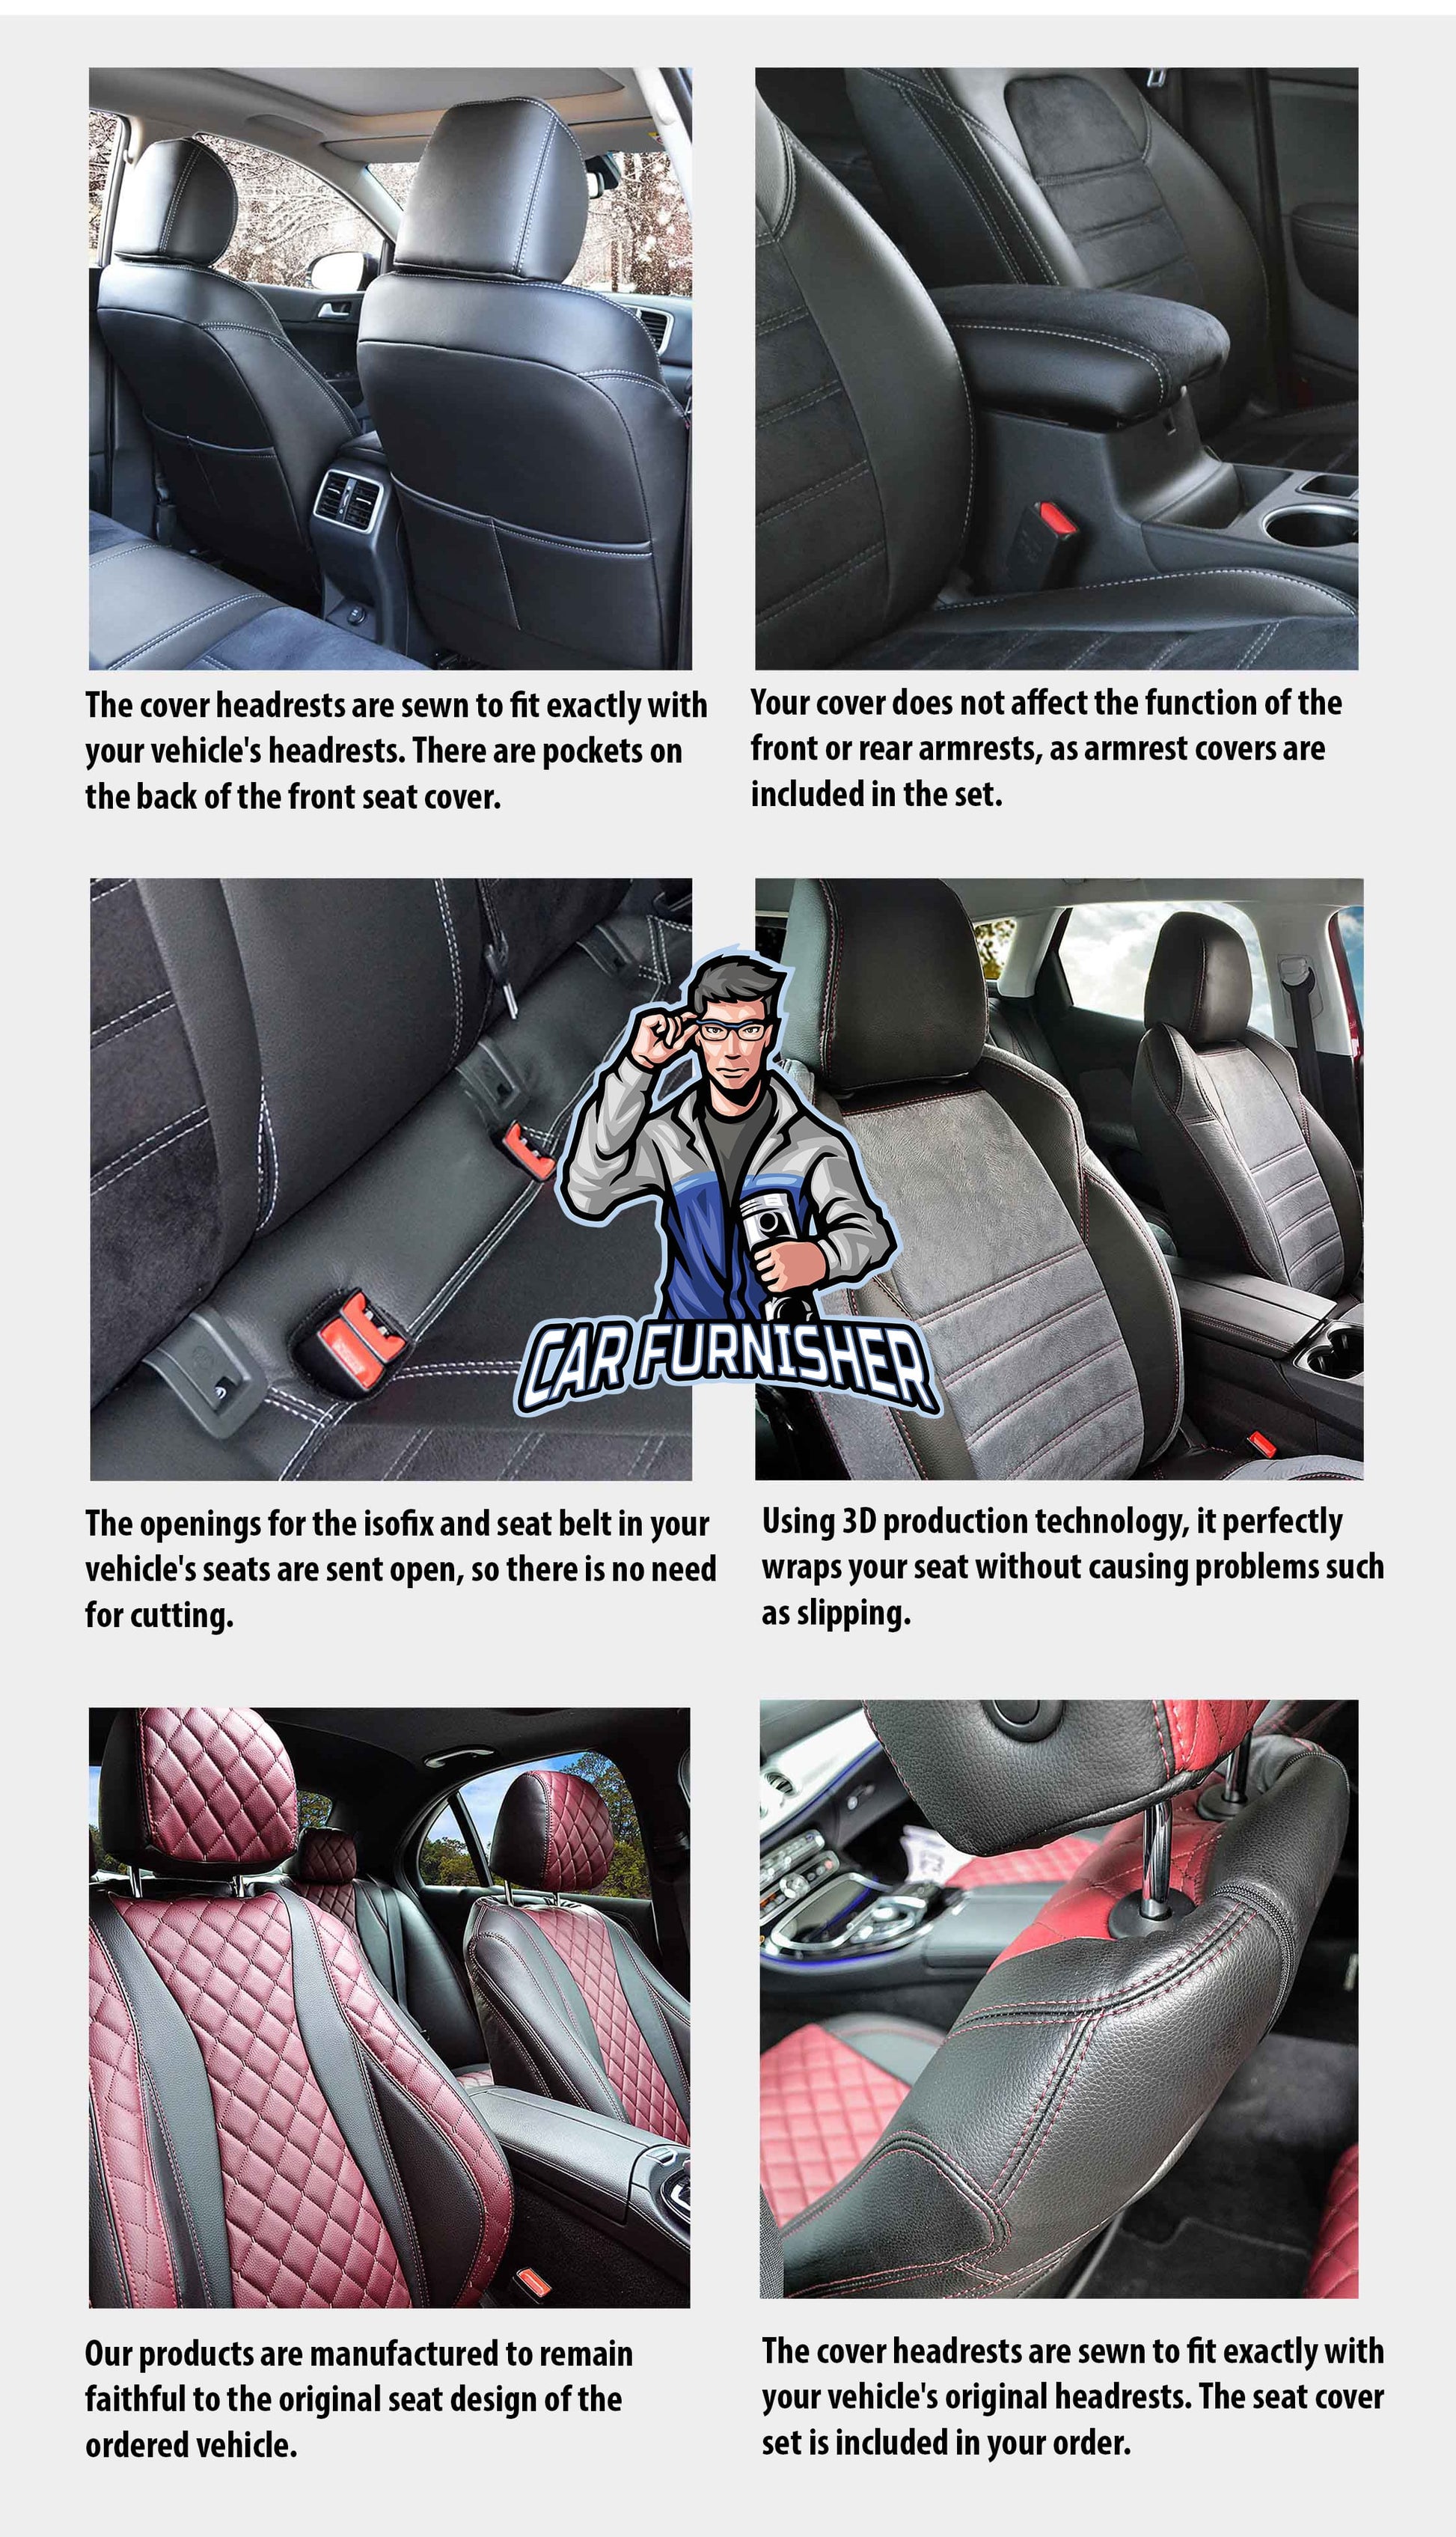 Mercedes Citan Seat Covers Paris Leather & Jacquard Design Gray Leather & Jacquard Fabric